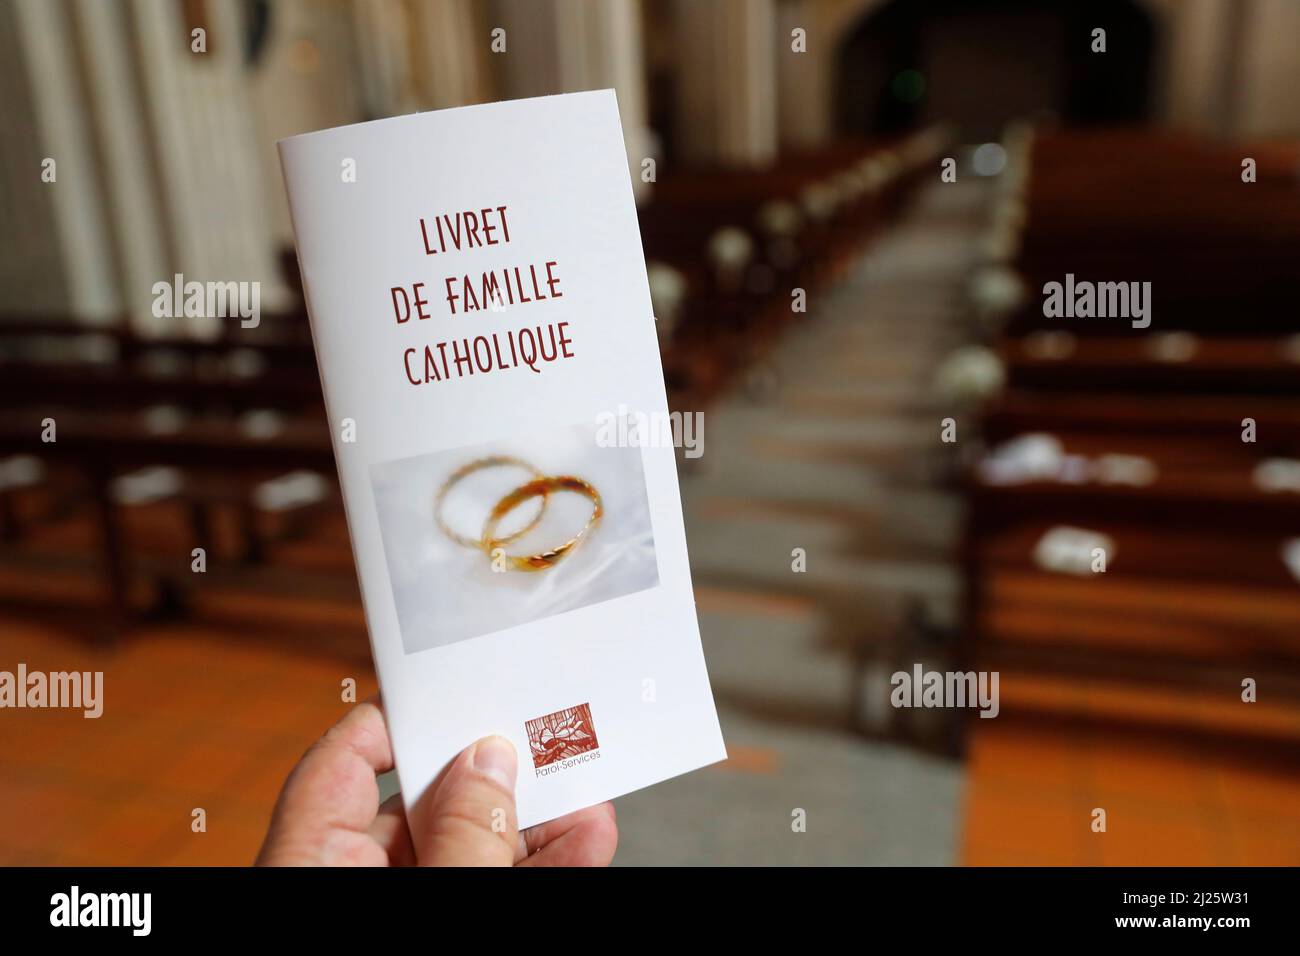 Wedding ceremony in a catholic church.  Catholic family register. Stock Photo